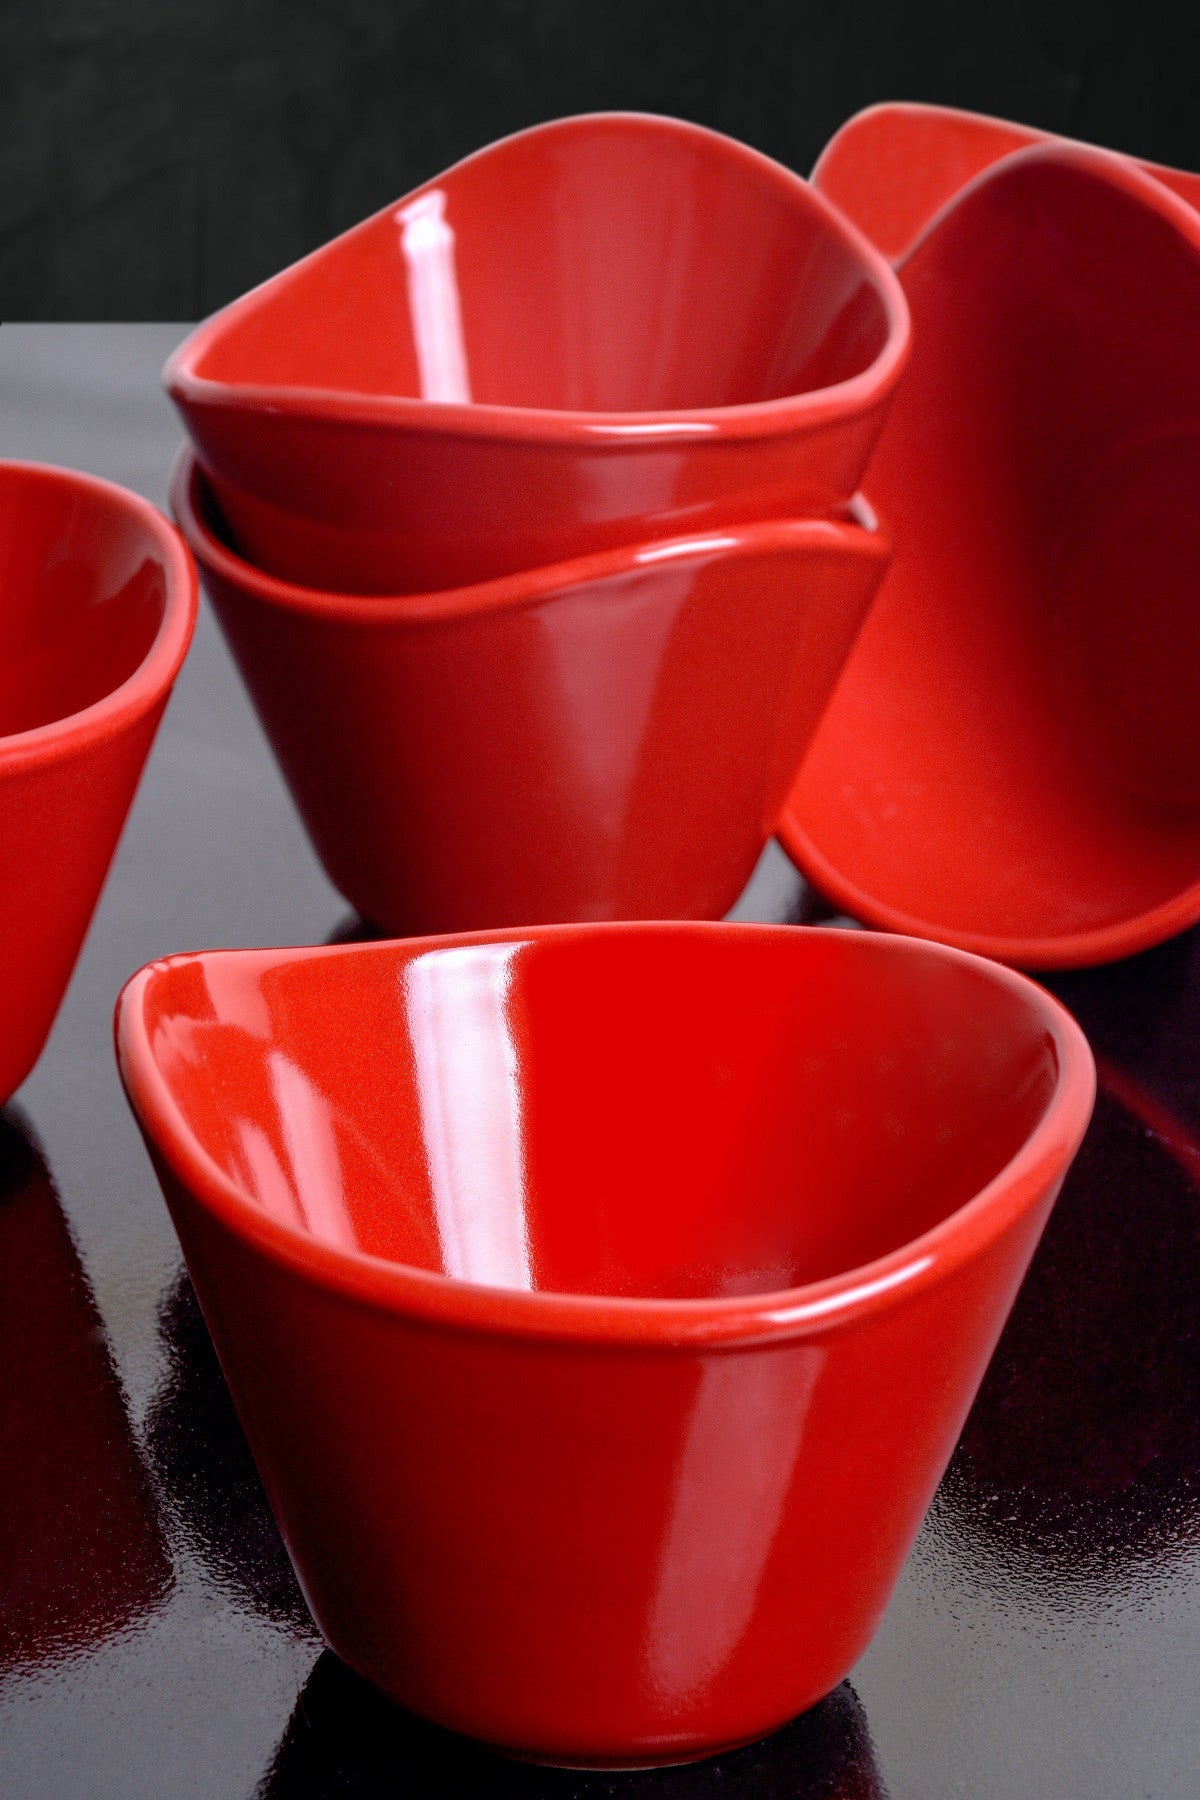 Set boluri ceramice Tigela Red Snack Bowl 11 Cm 6 Pieces, Roșu, 11x7.1x7.1 cm